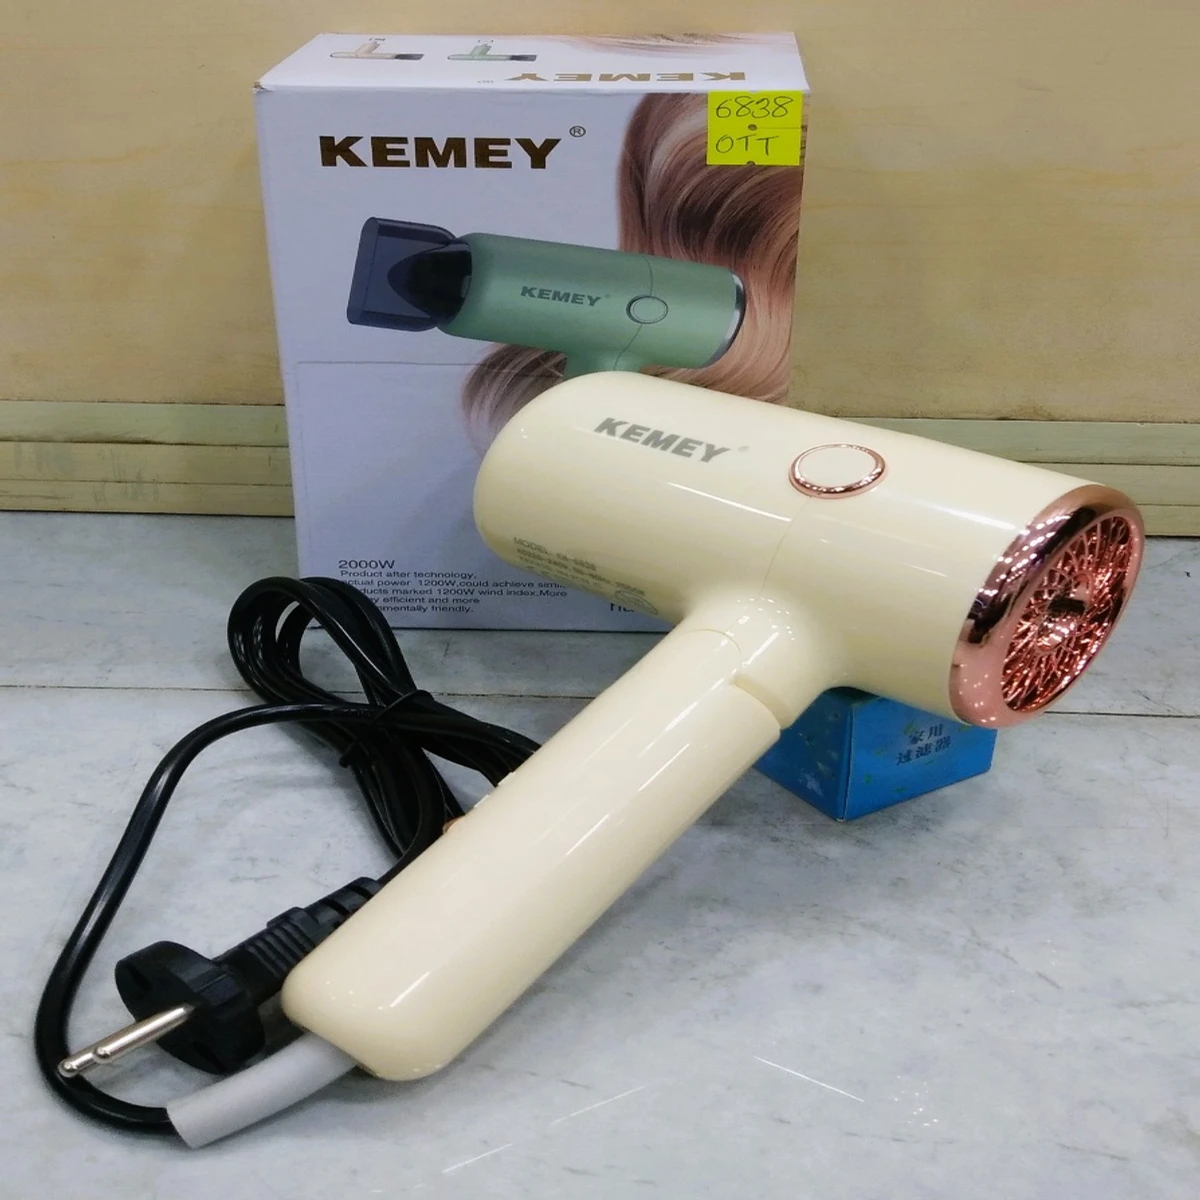 Kemie hair dryer